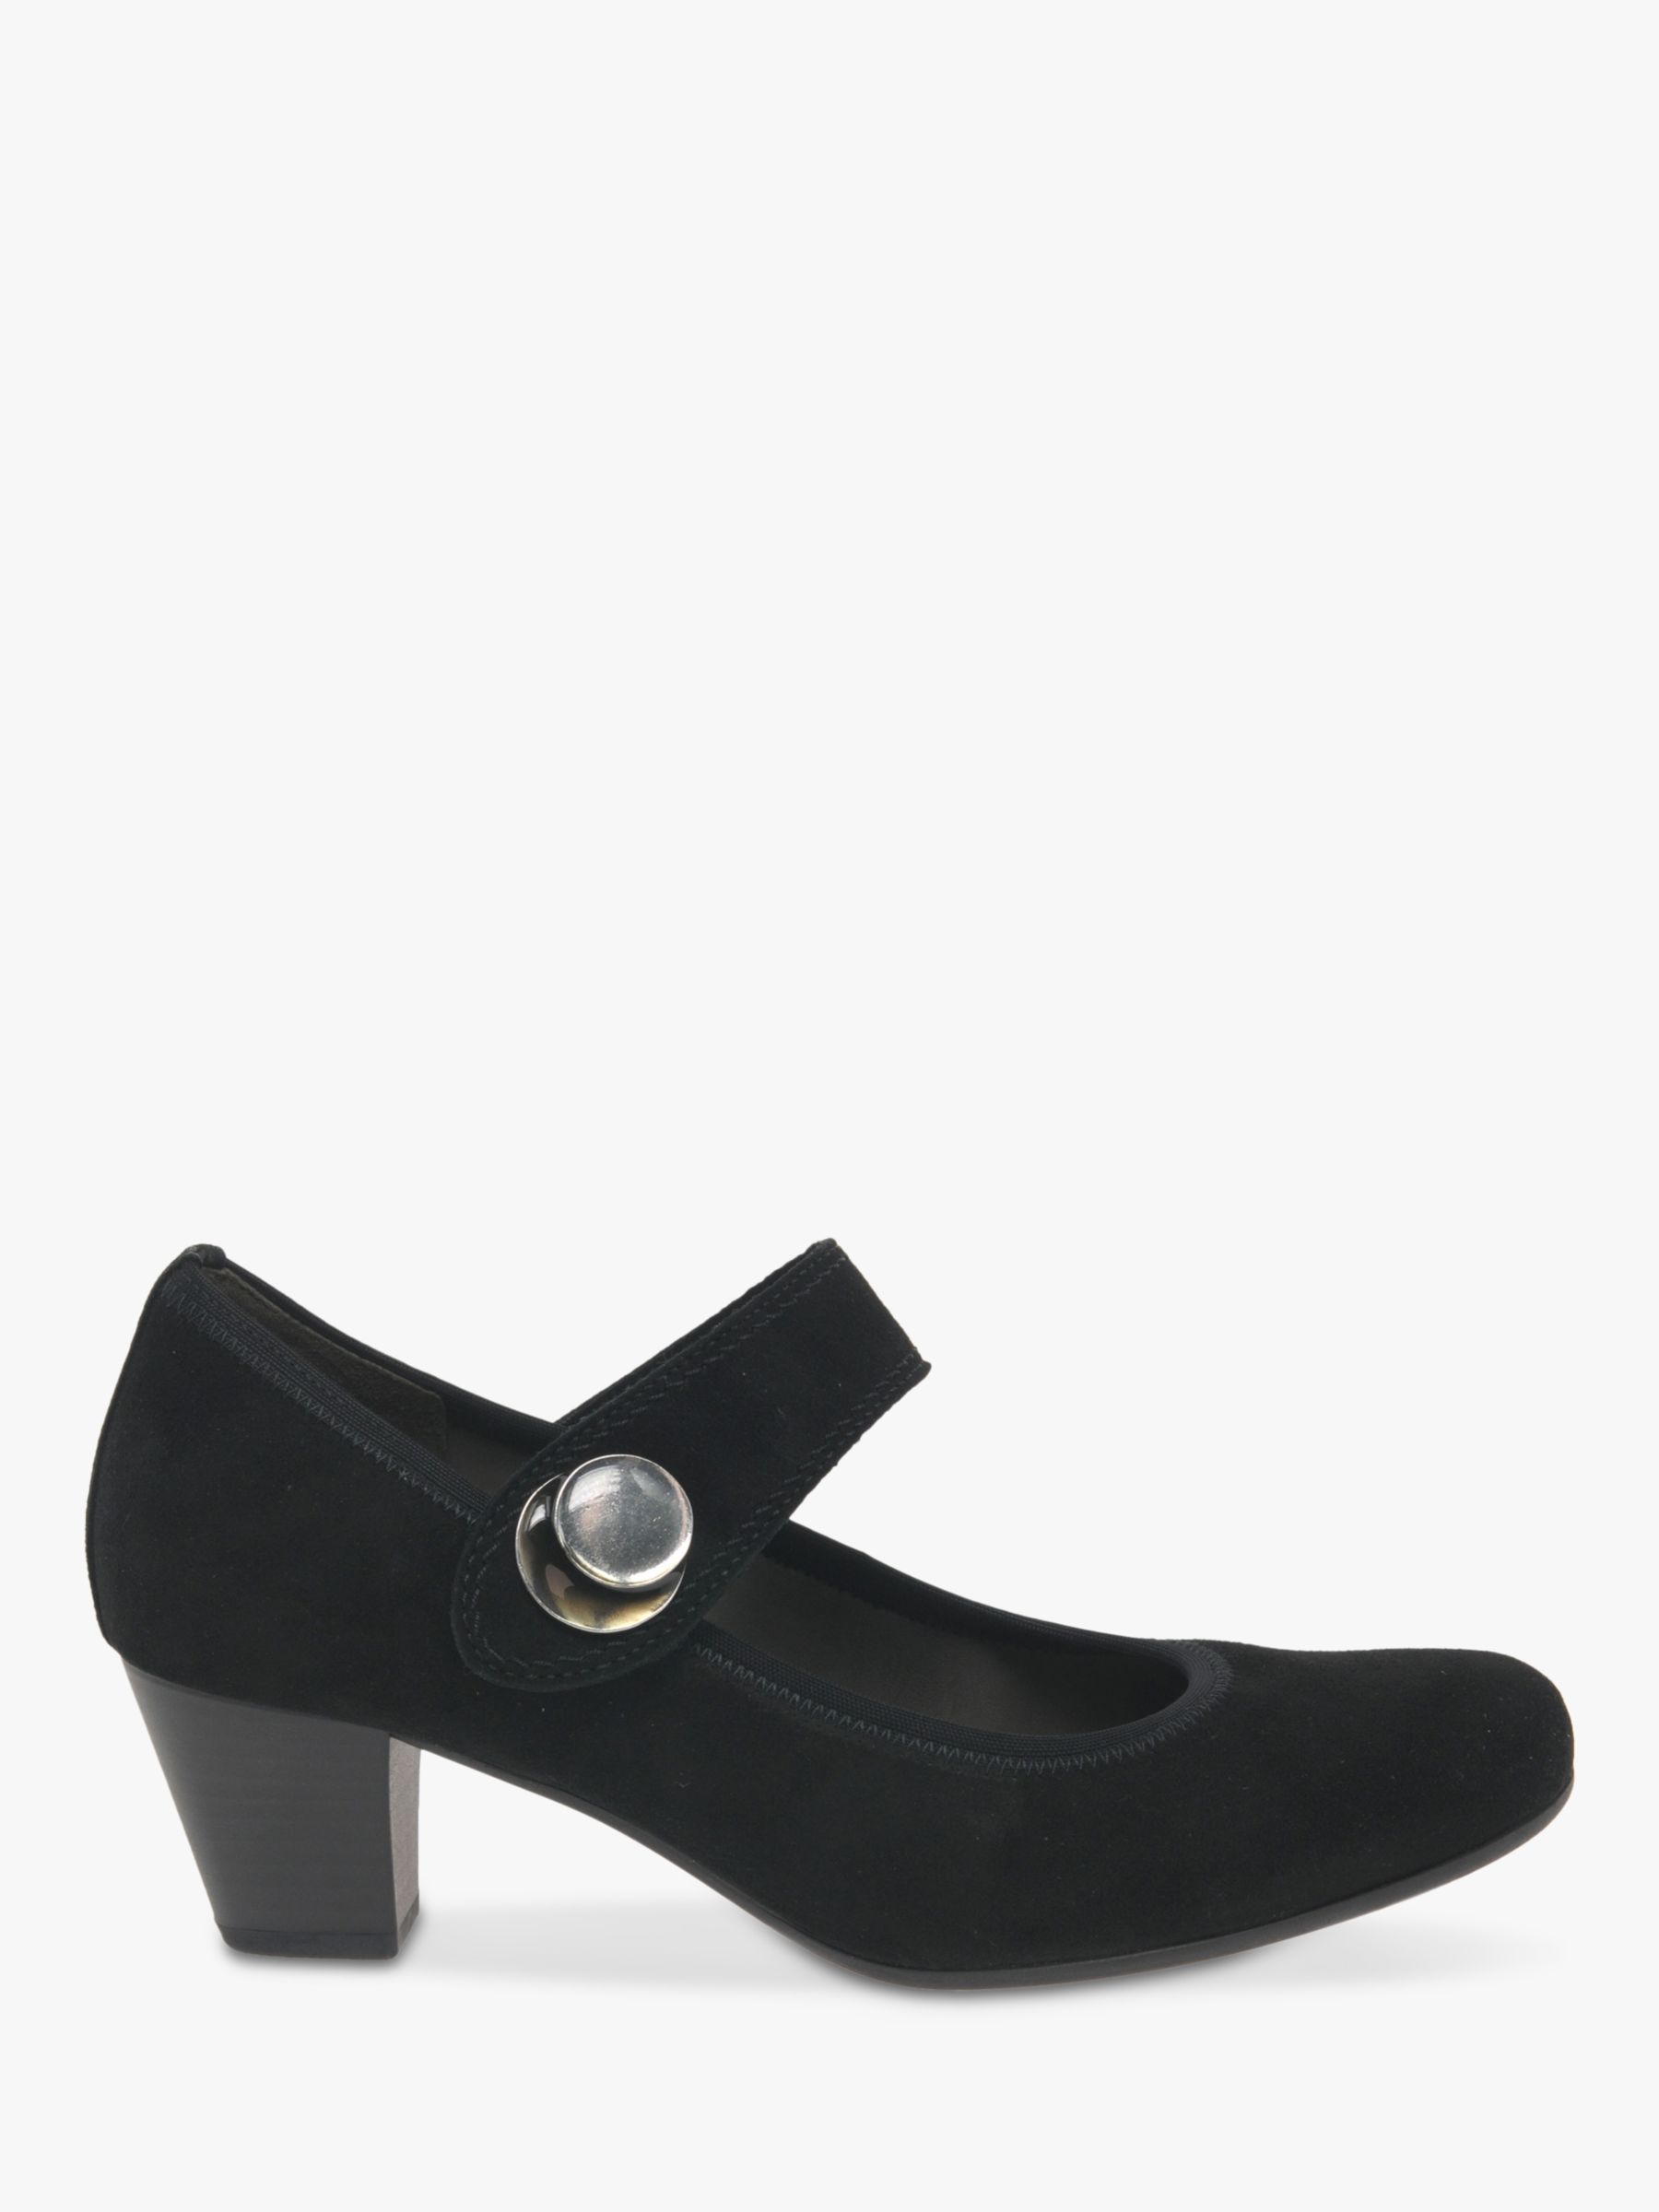 Gabor Nola Suede Cone Heeled Mary Jane Court Shoes, Black